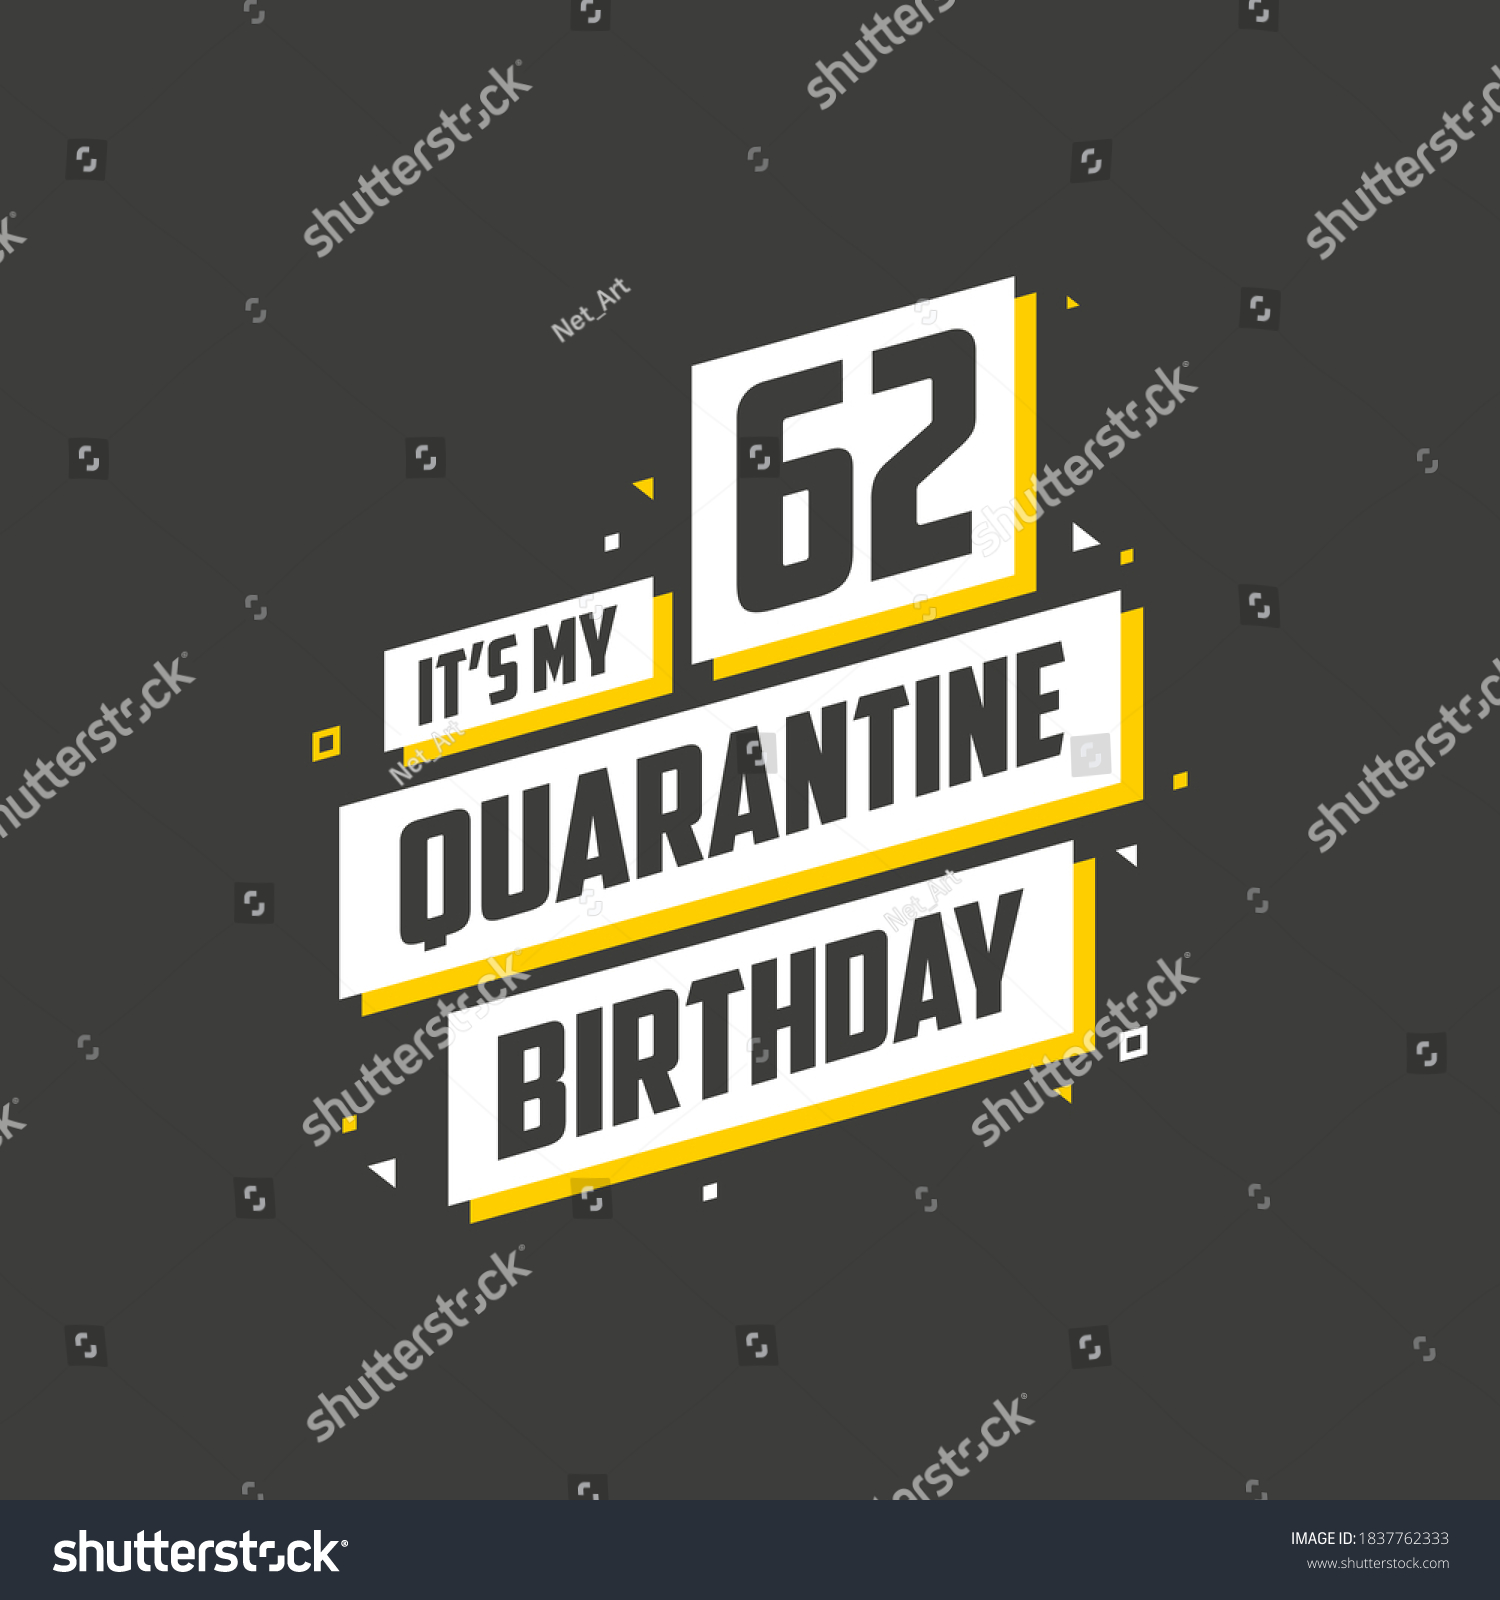 It's my 62nd Quarantine birthday, 62 years birthday design. 62nd birthday celebration on quarantine. #1837762333